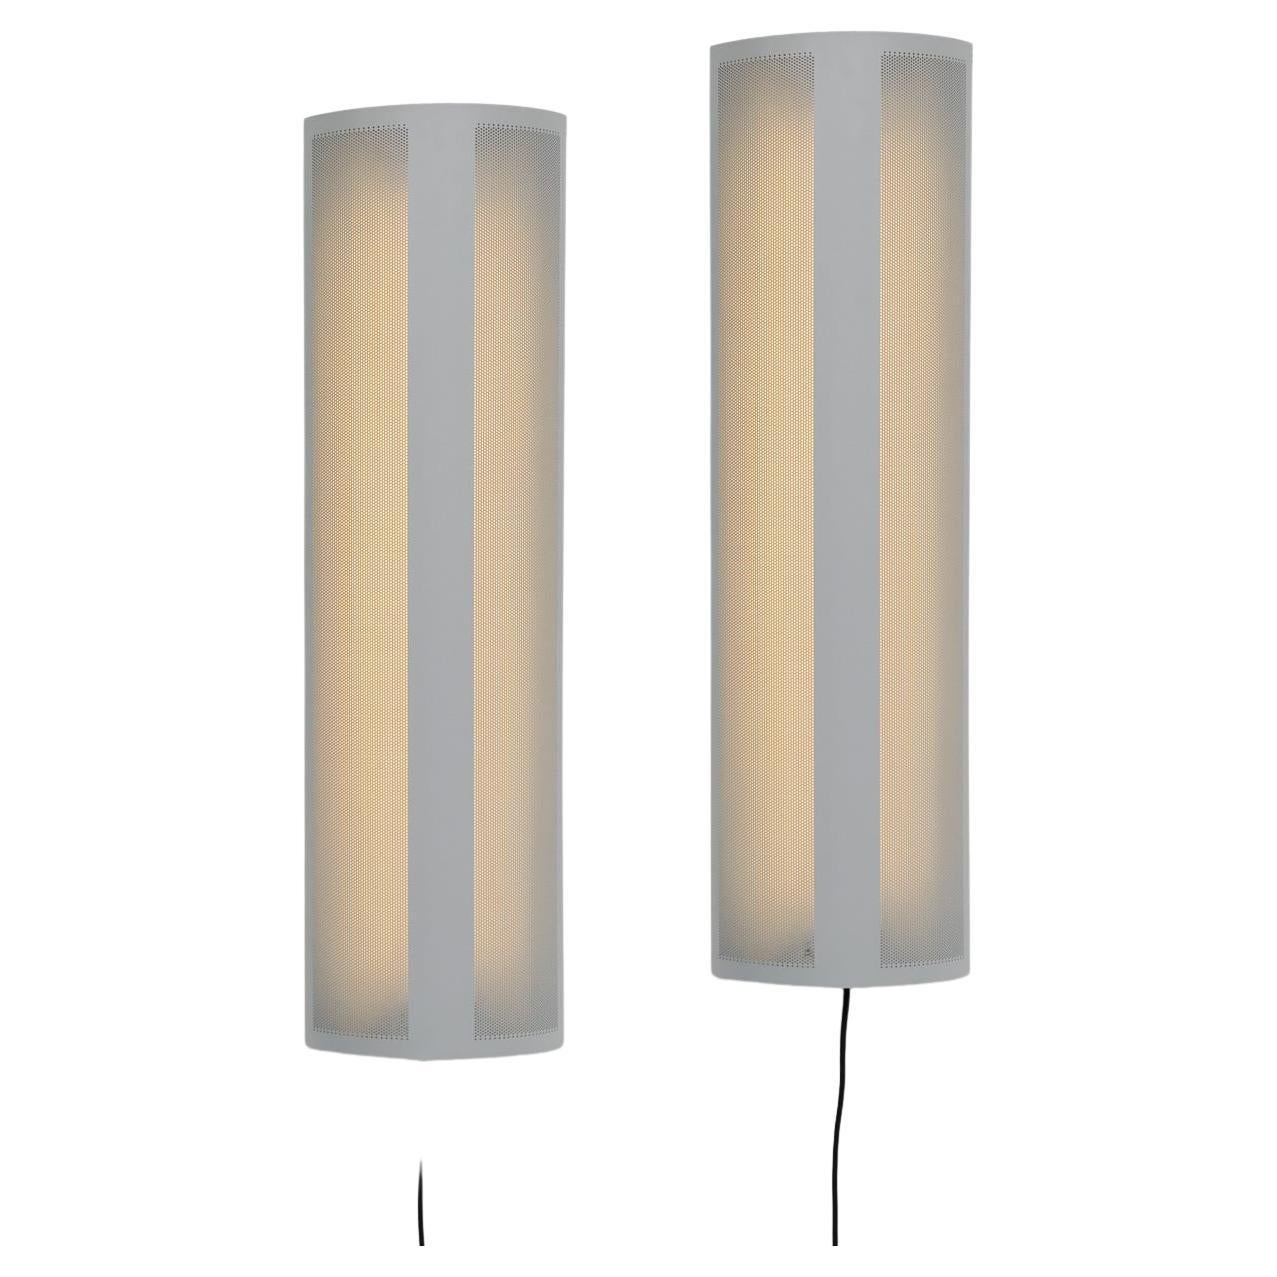 Mategot Inspired Mod Industrial Fluorescent Linear Wall Lamps